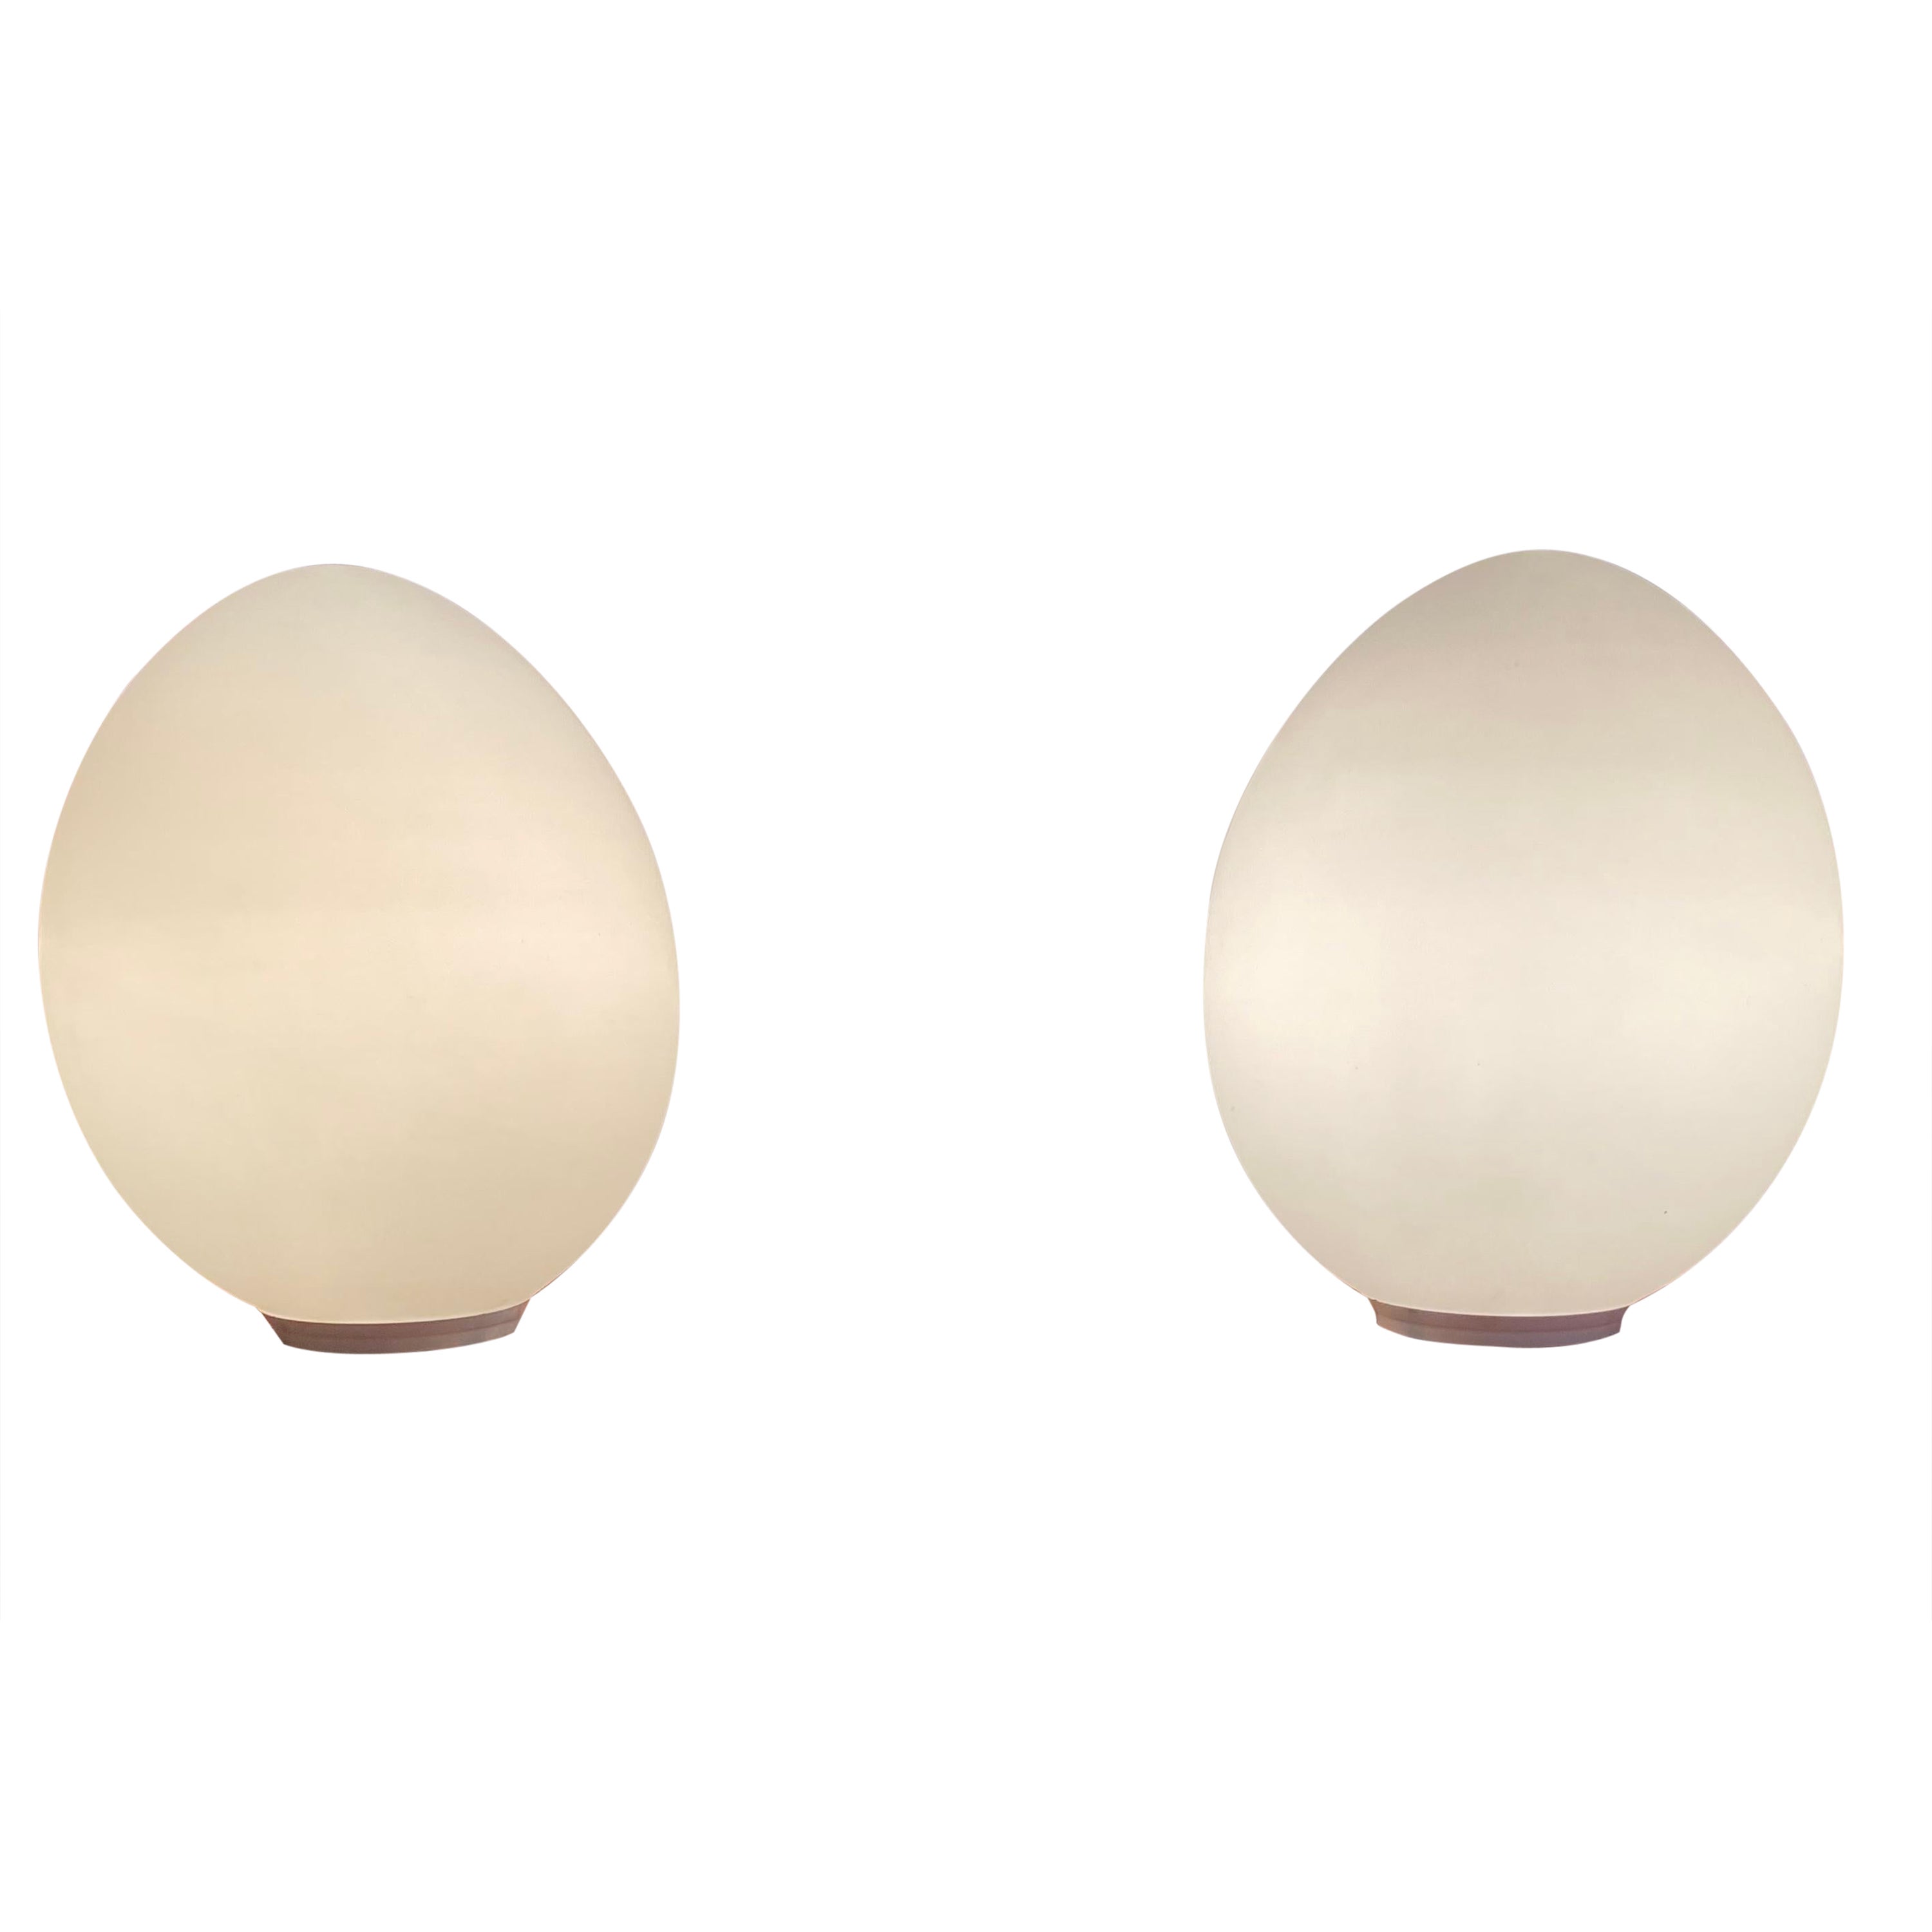 Pair Large Laurel Lamp Company Glass Egg Lamps. Italian Glass